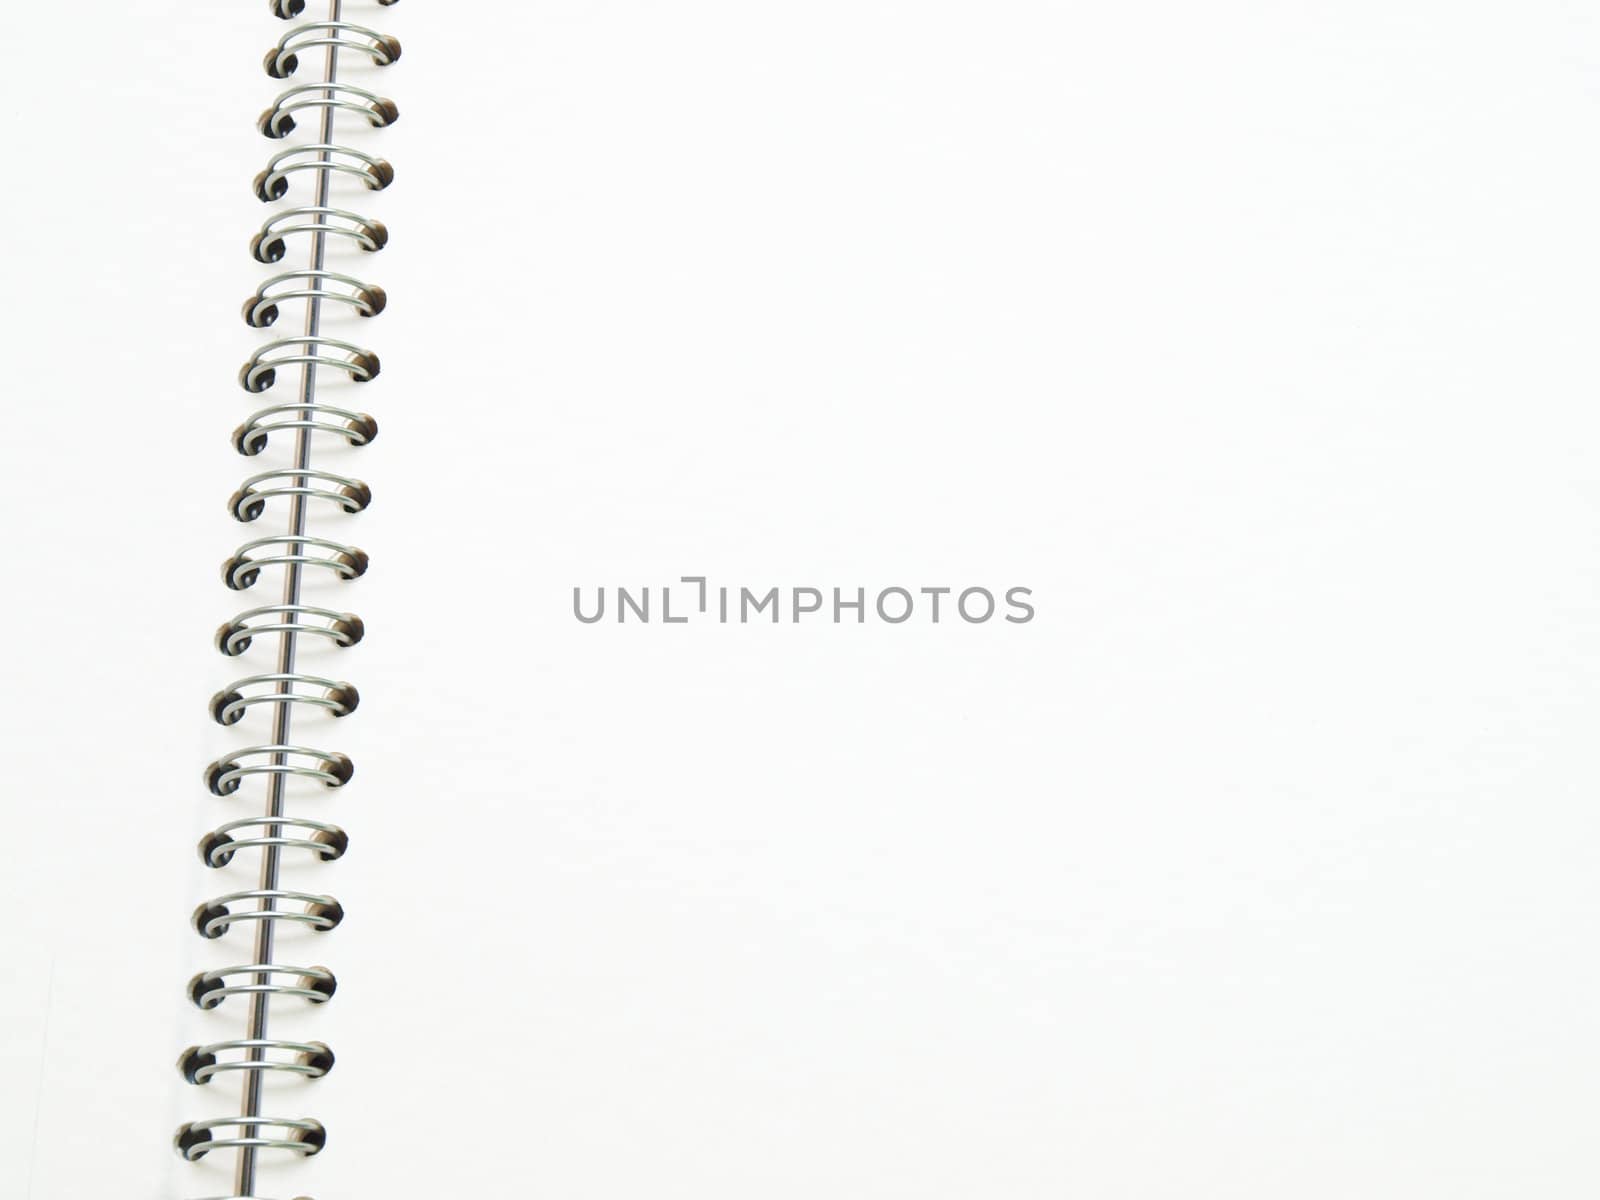 open spiral binding notebook on white by gururugu